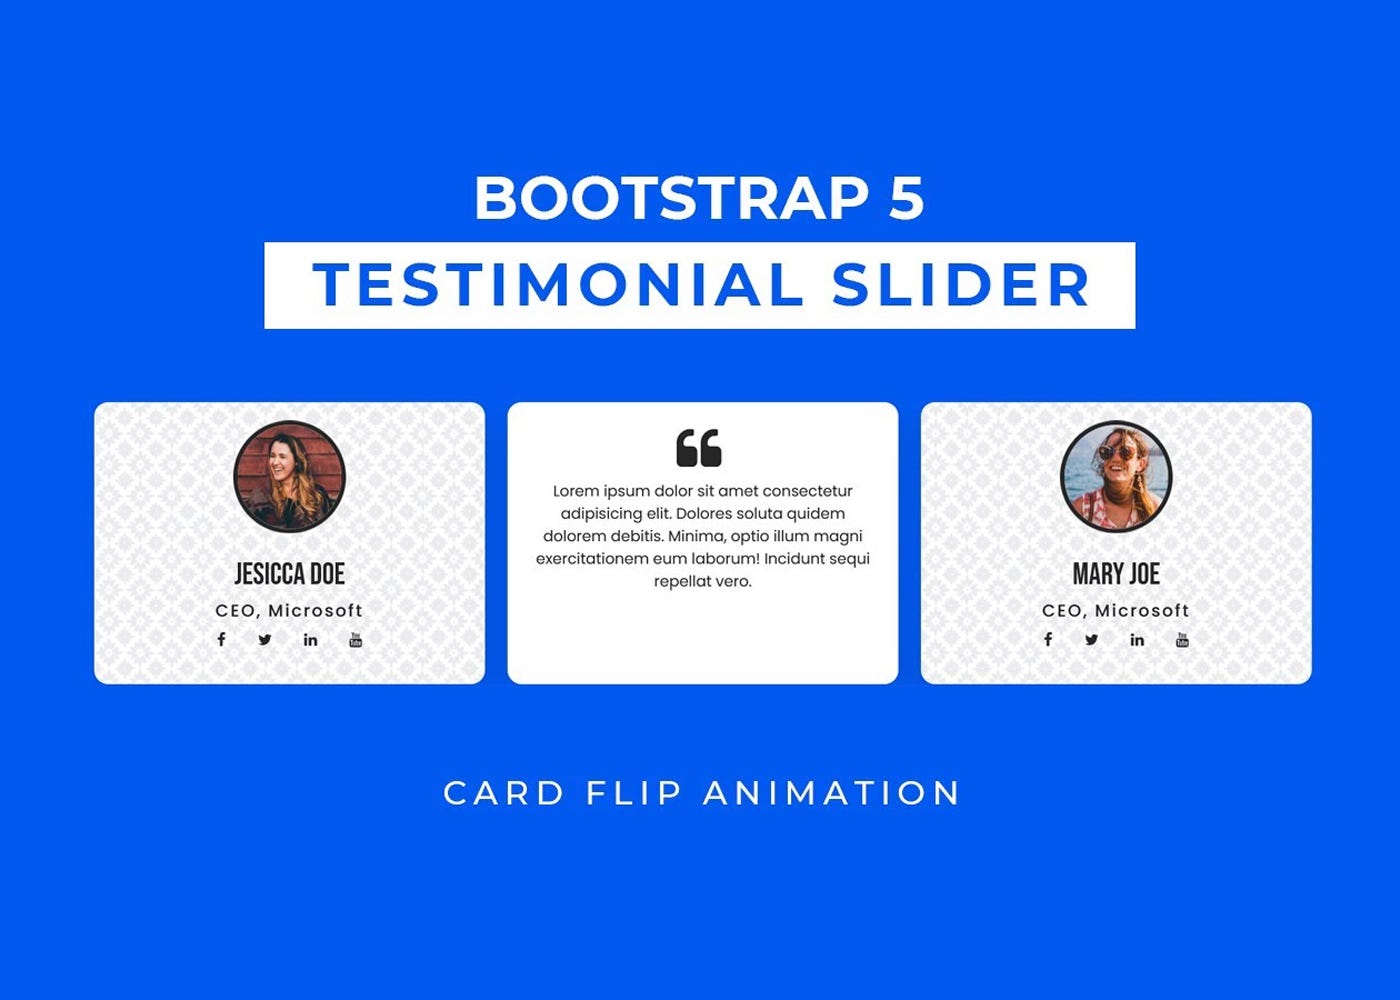 Bootstrap 5 Testimonials with Flip Animation - Divinector - Medium